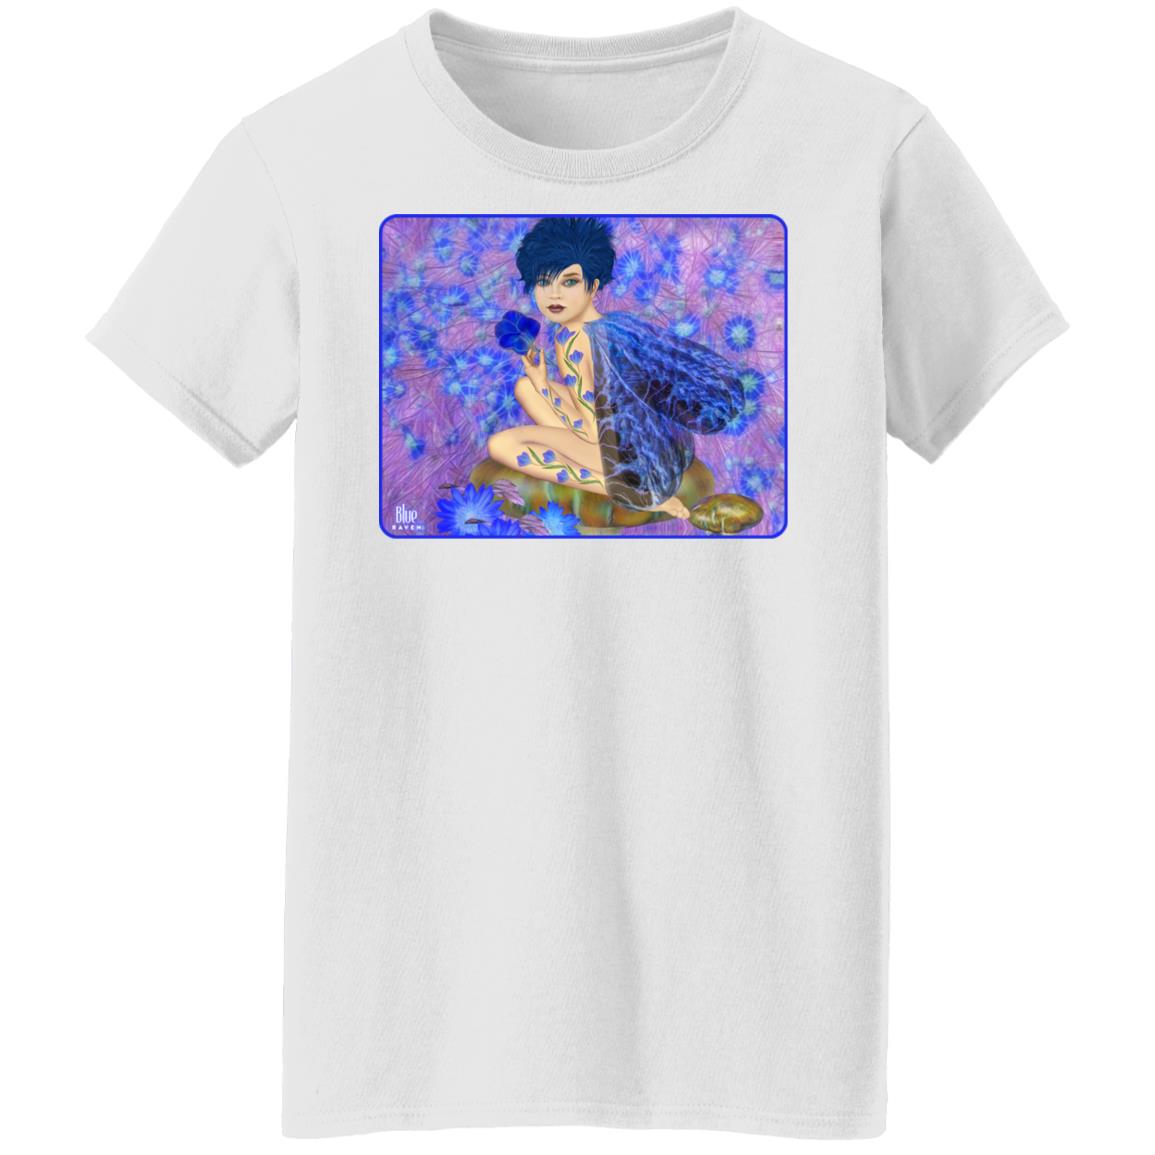 Blue Fairy - Women's Relaxed Fit T-Shirt